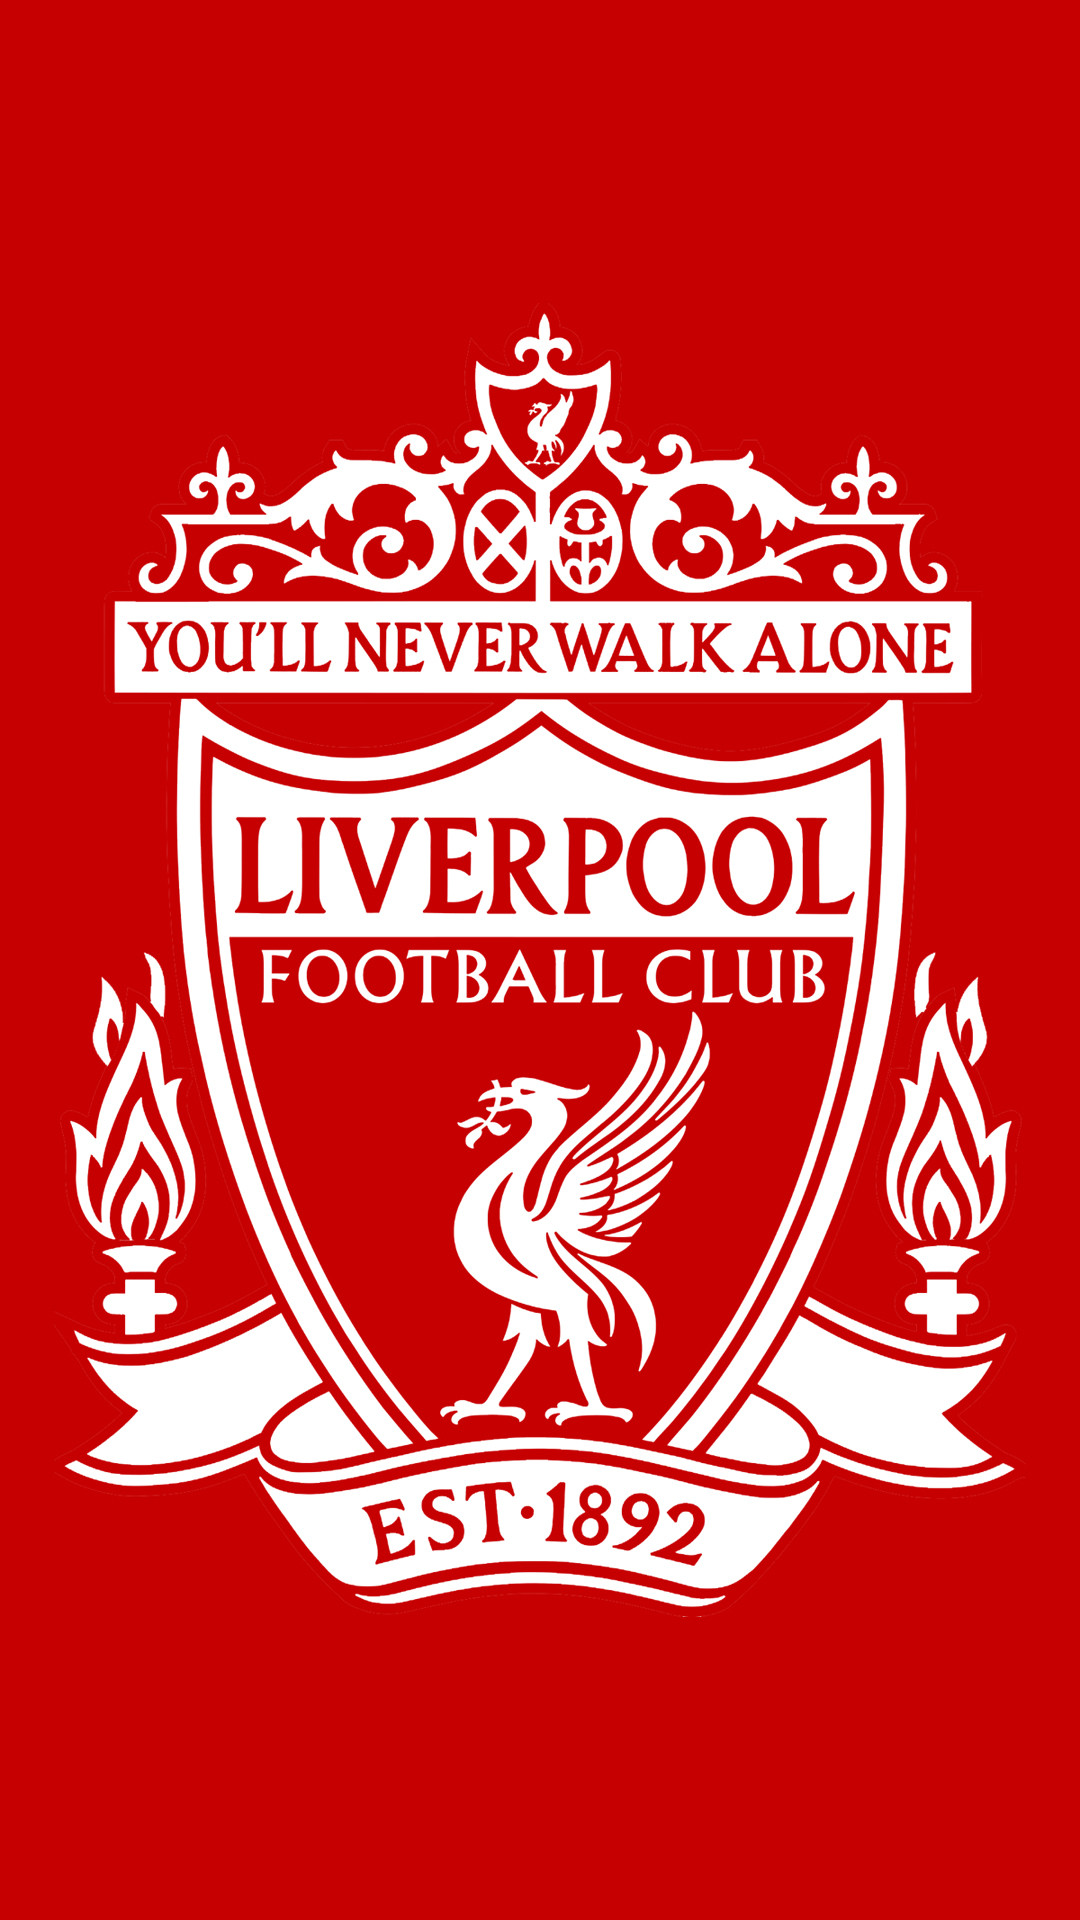  Wallpaper  Logo Liverpool  2021   WallpaperTag